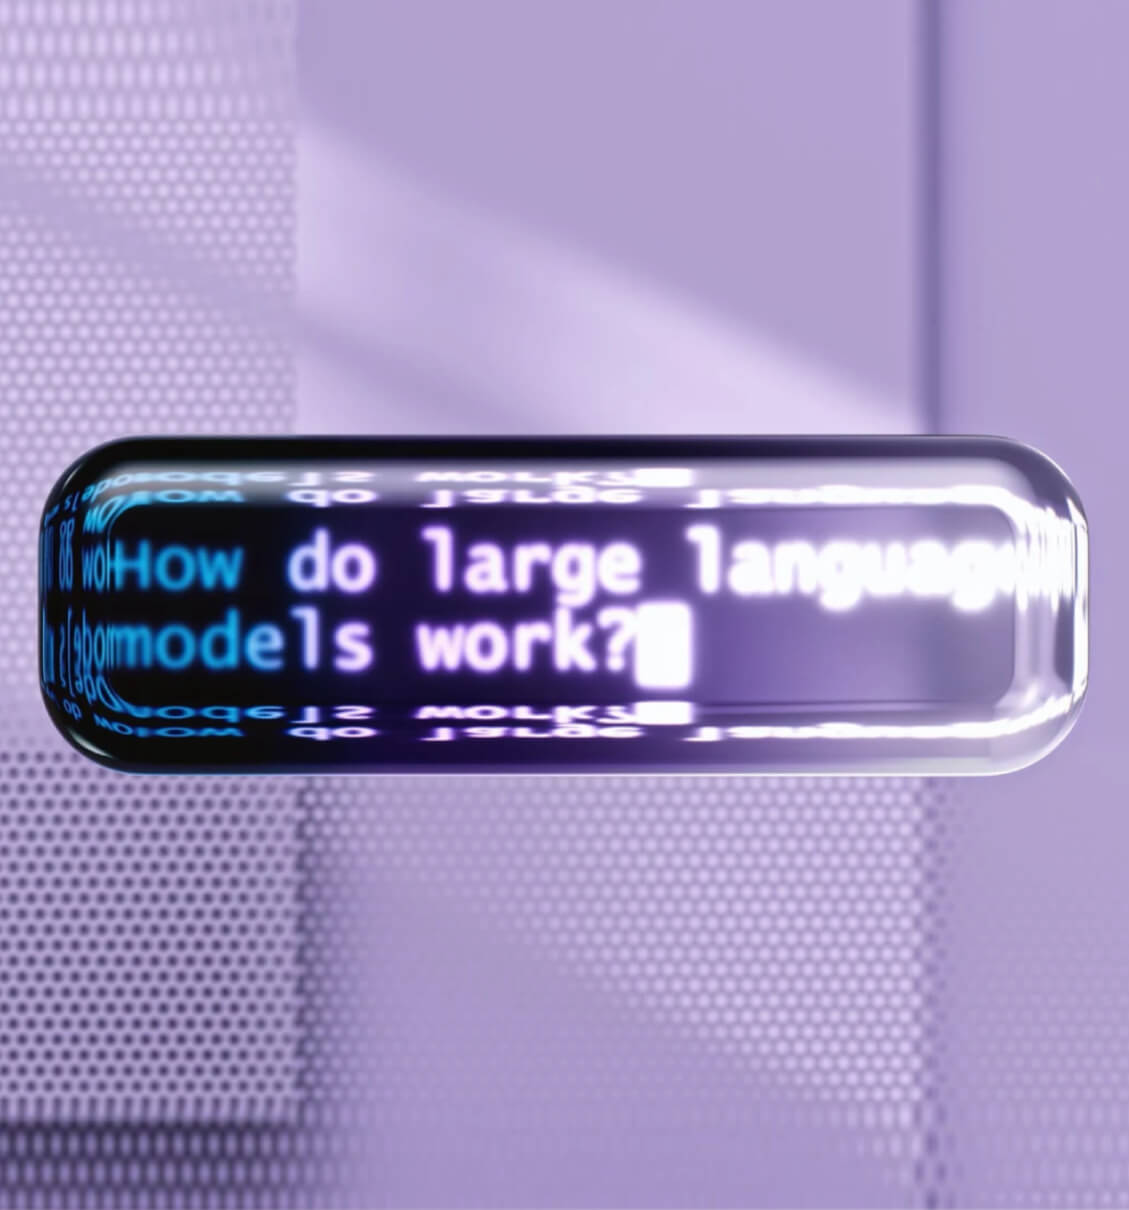 Large Language Model pill photo